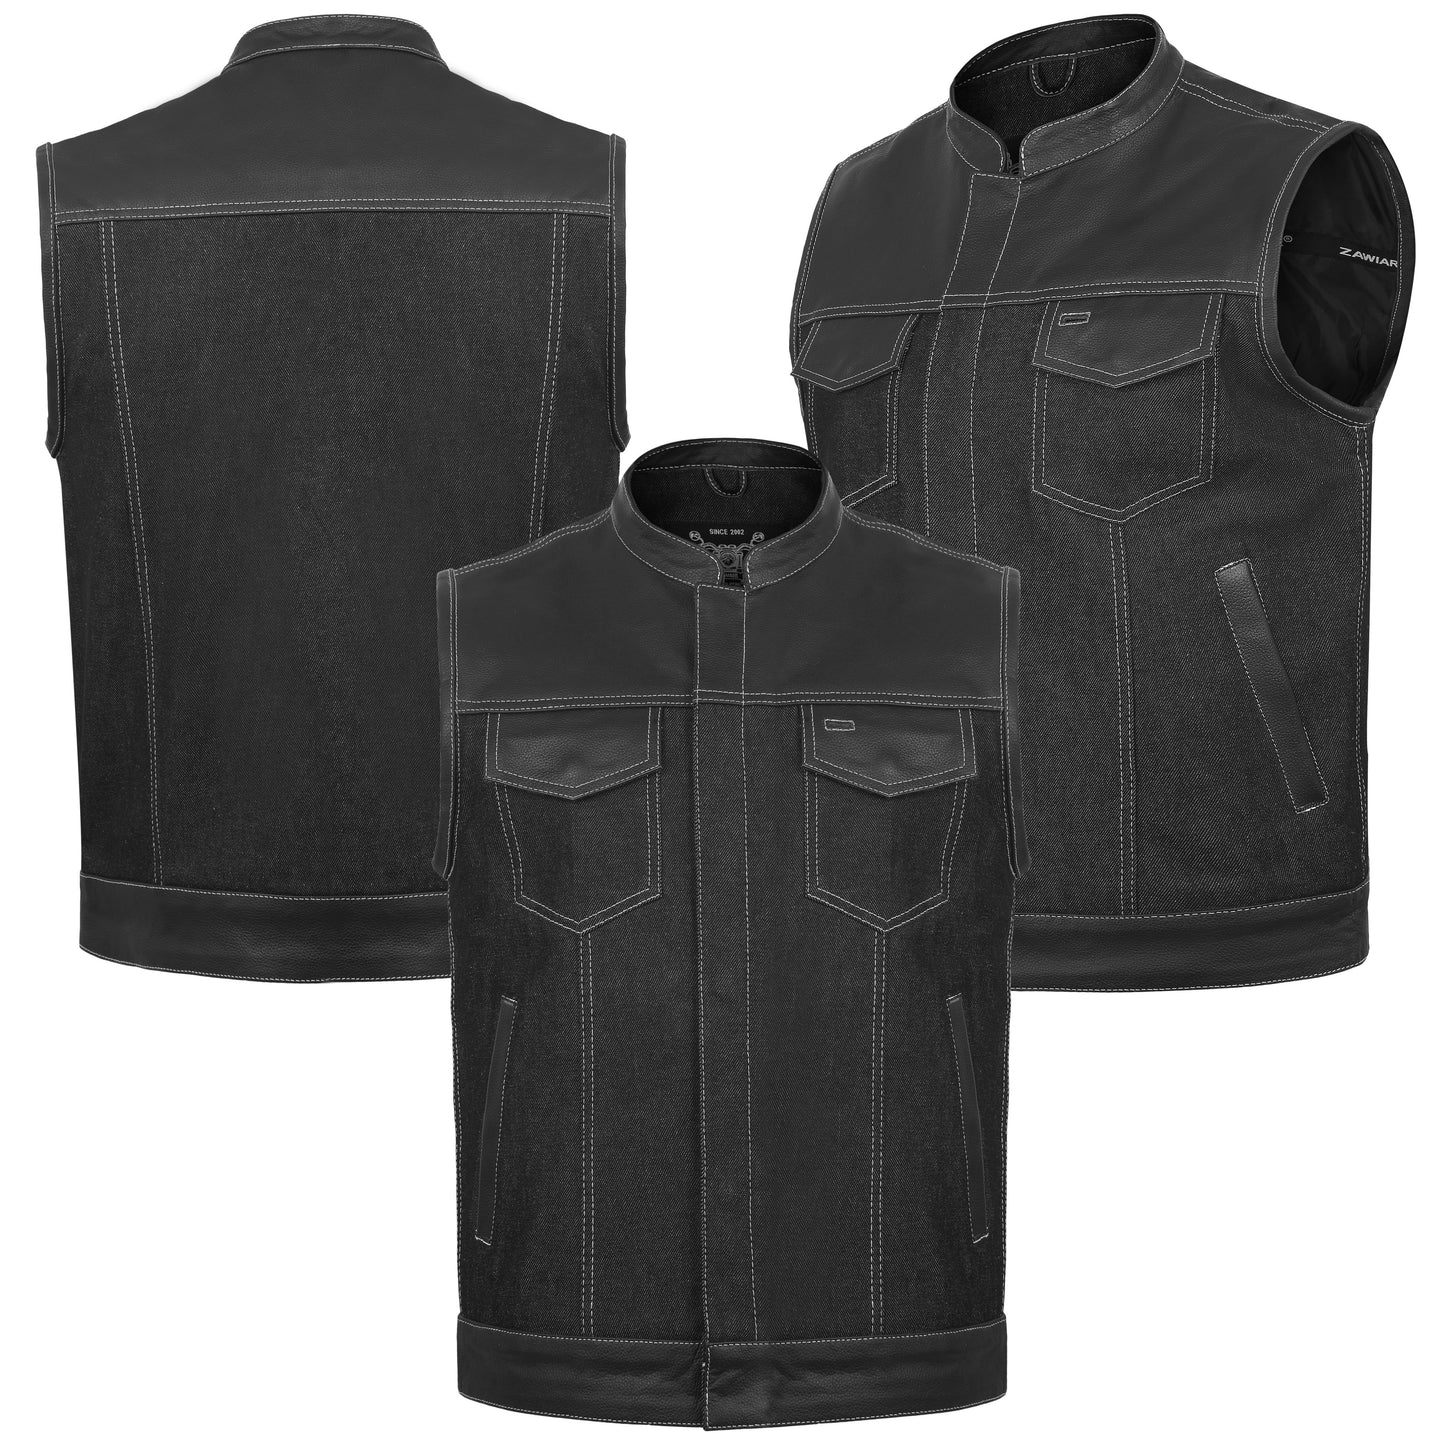 ZAWIAR Mens Black Leather & Denim Classic Club Style Waistcoat Vest for Bikers…